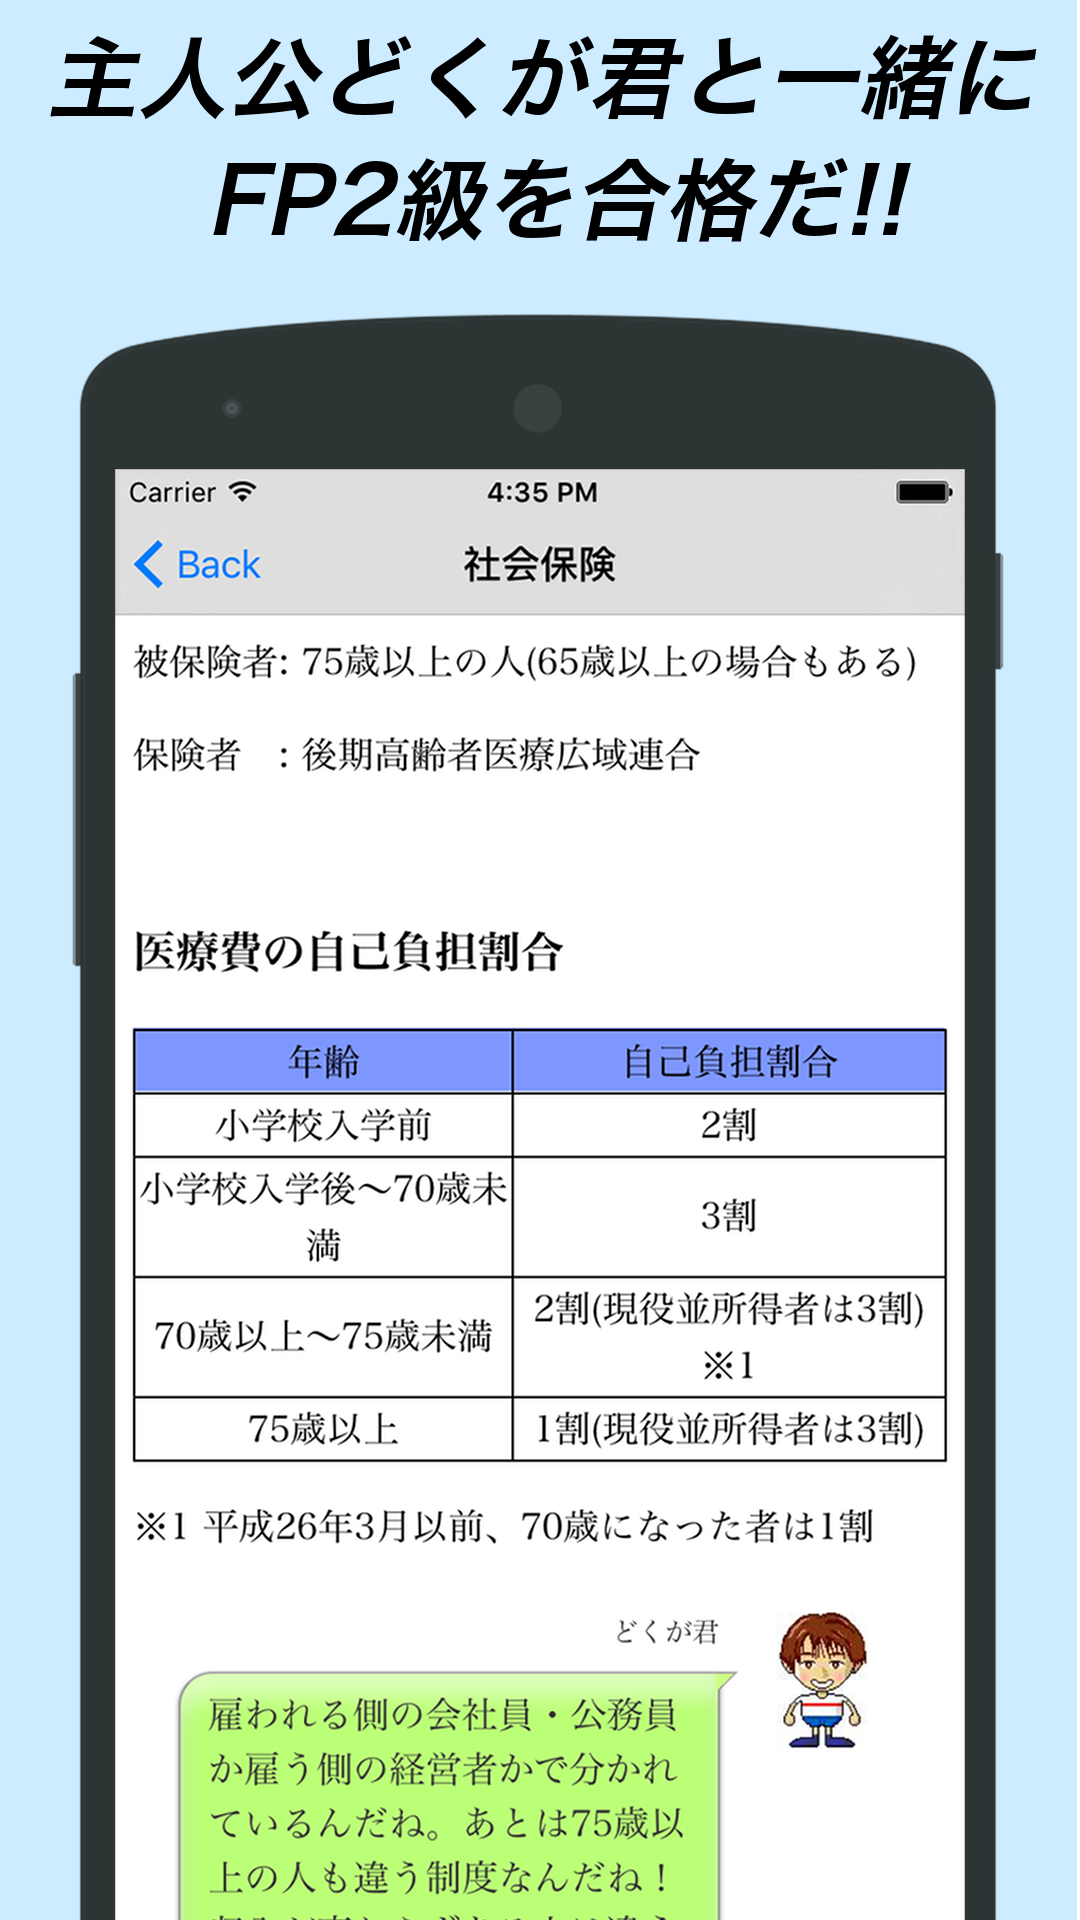 Android application FP2級学科攻略アプリ / 無料で独学合格できる！ screenshort